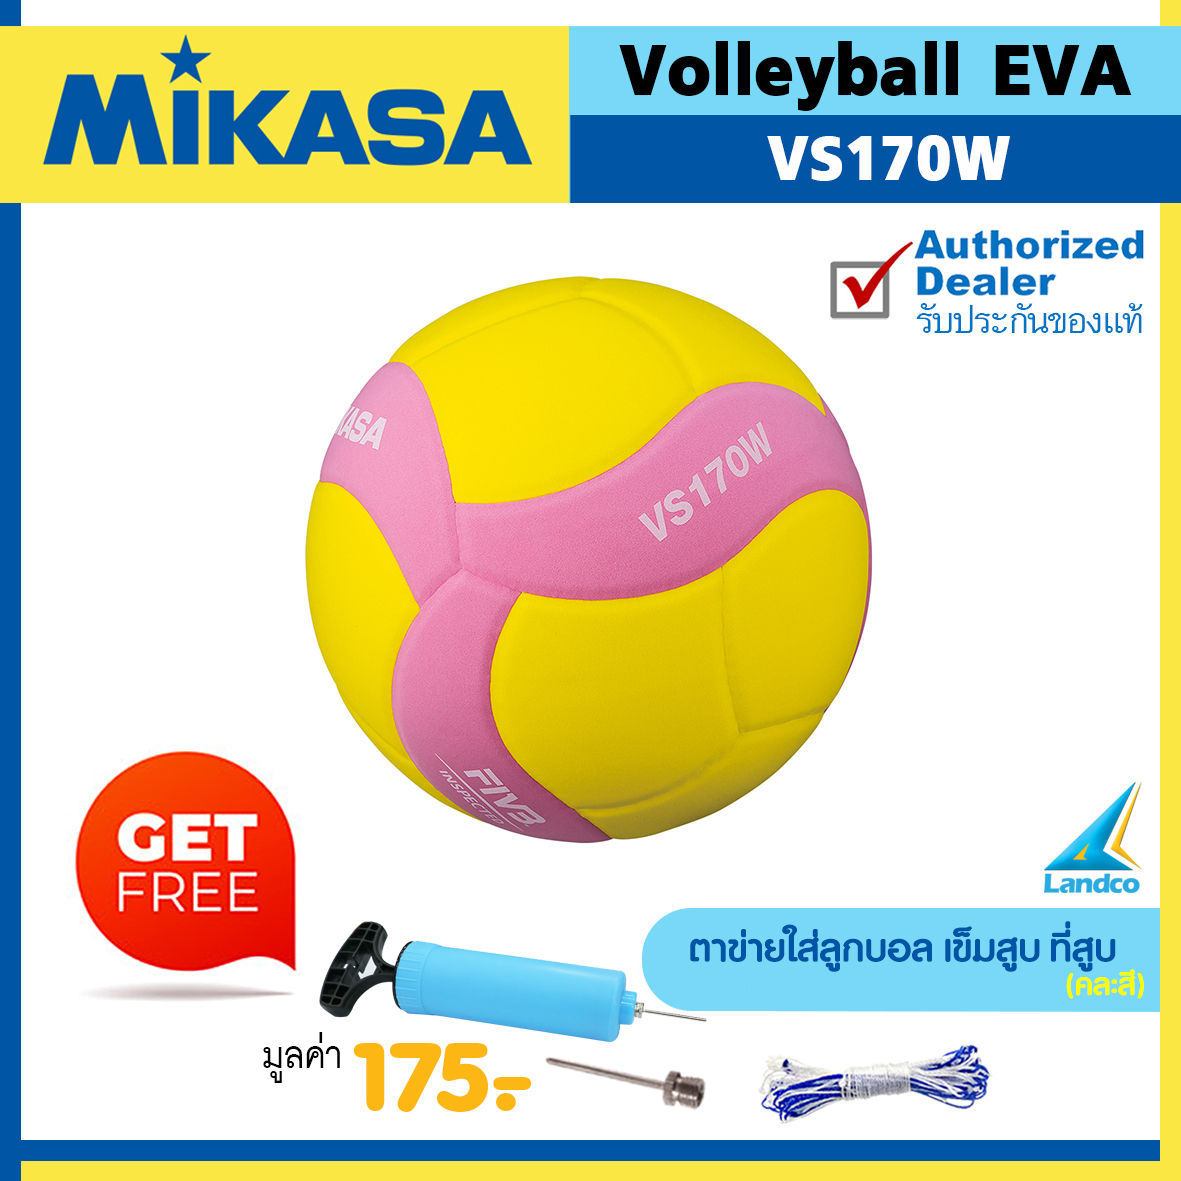 MIKASA ลูกวอลเลย์บอล สำหรับเด็ก Volleyball EVA VS170W FIVB เบอร์ 5 (มี 3 สี) (แถมฟรี ตาข่ายใส่ลูกบอล + เข็มสูบ + สูบลมมือ SPL)